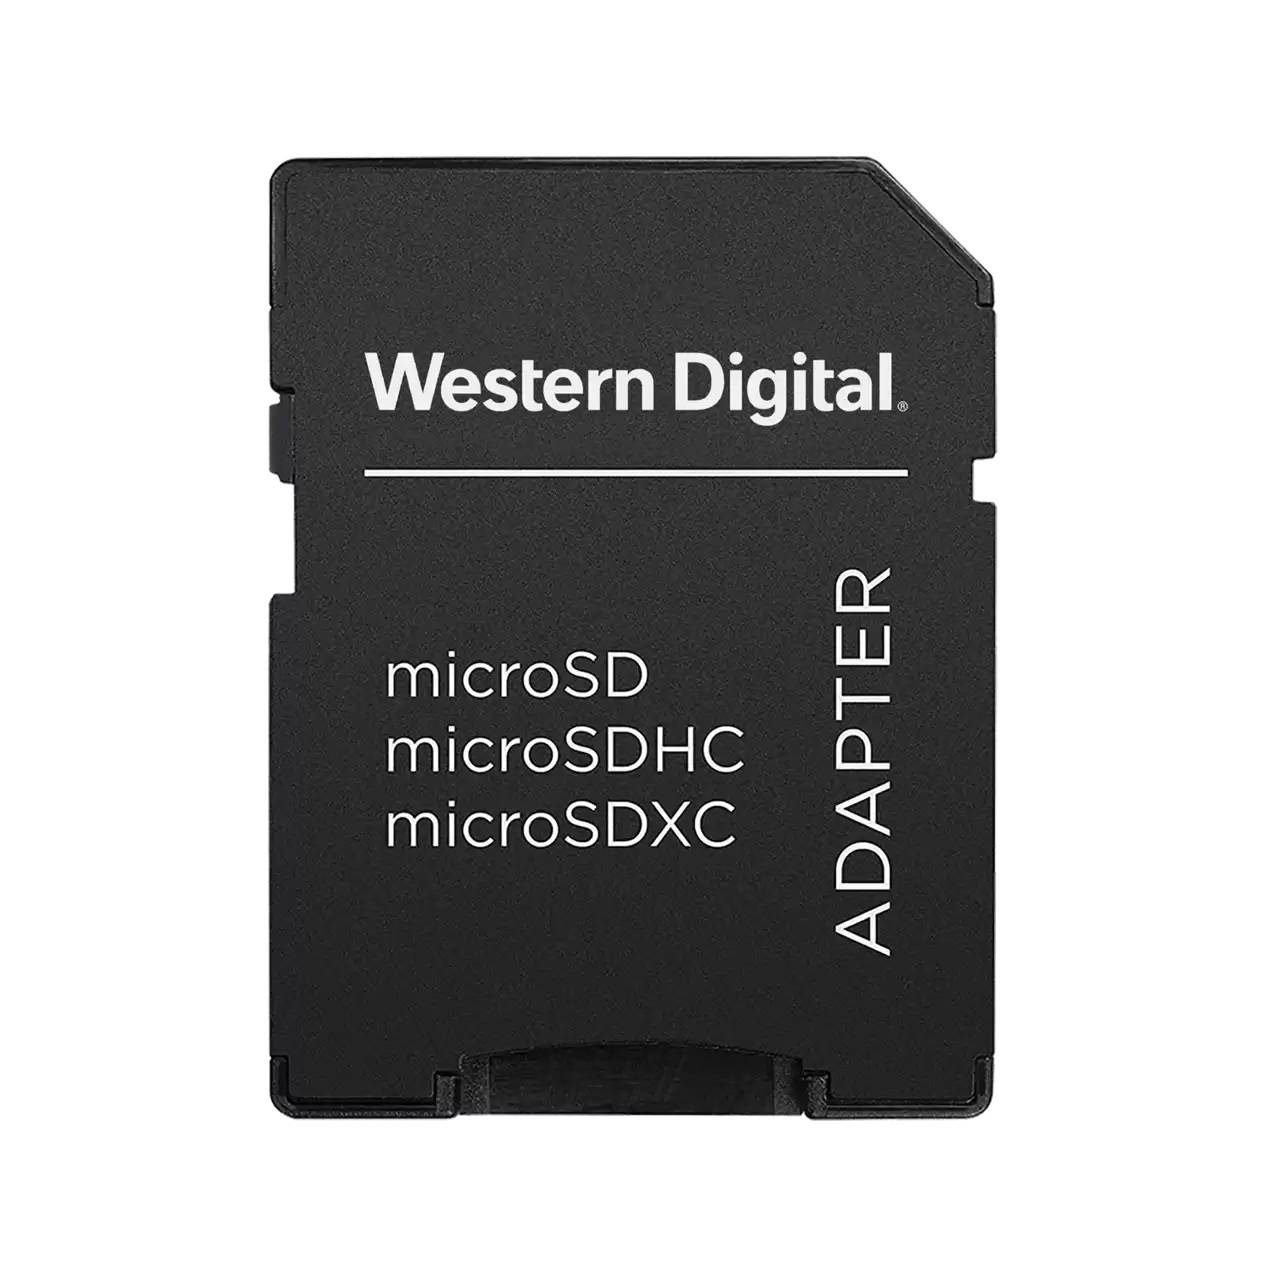 Western Digital WDDSDADP01 micro SD Adapter w/WD marking